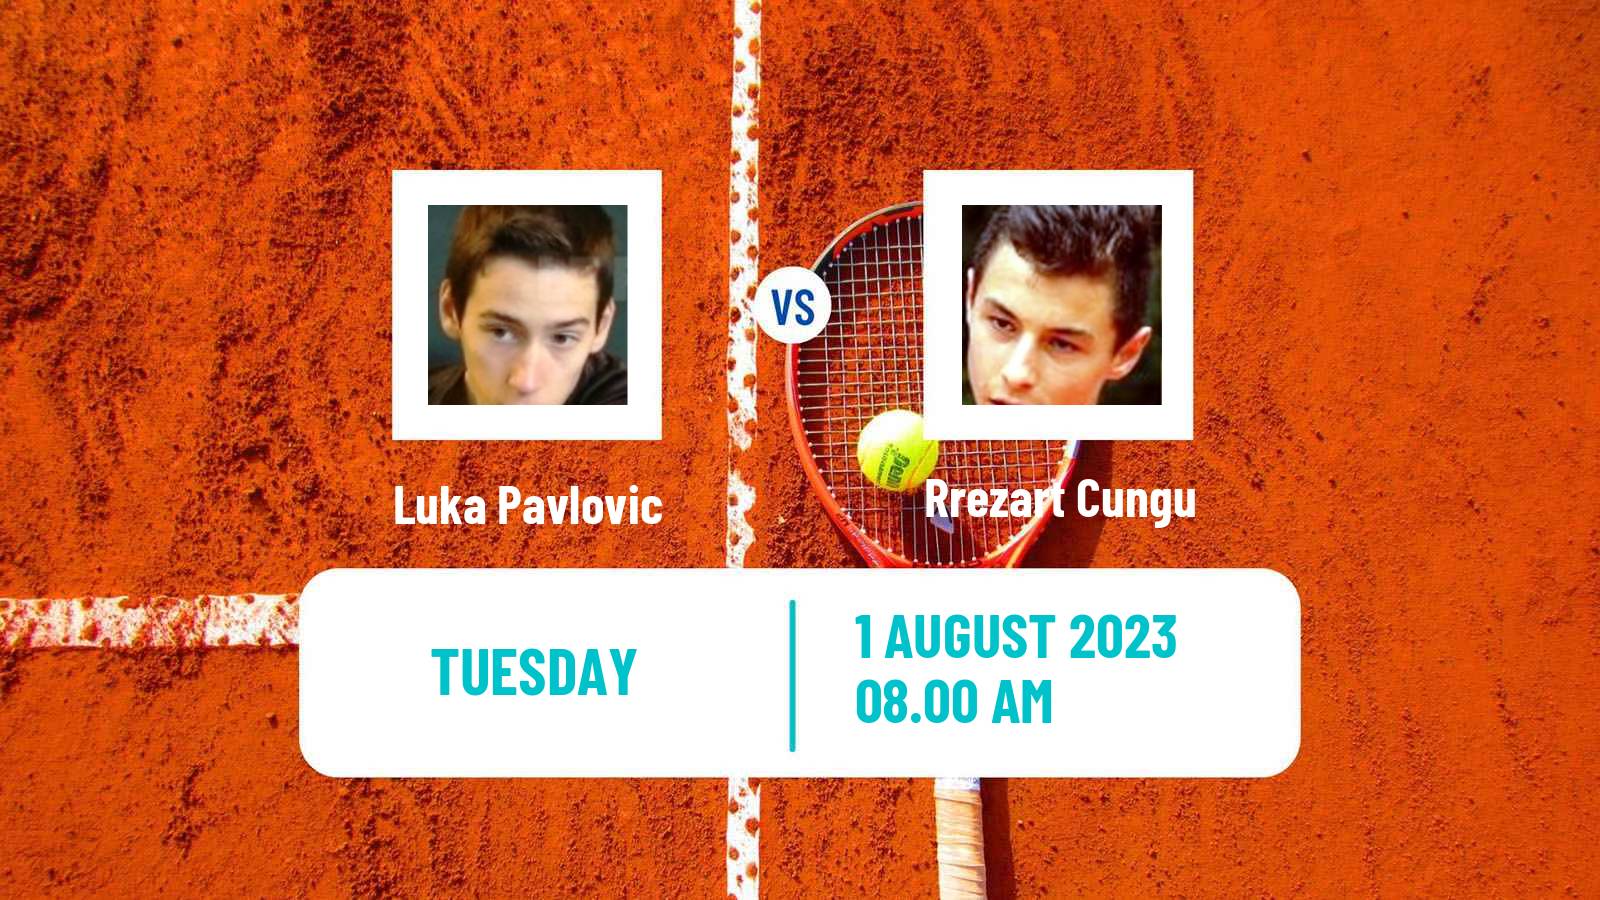 Tennis ITF M15 Novi Sad 3 Men 2023 Luka Pavlovic - Rrezart Cungu